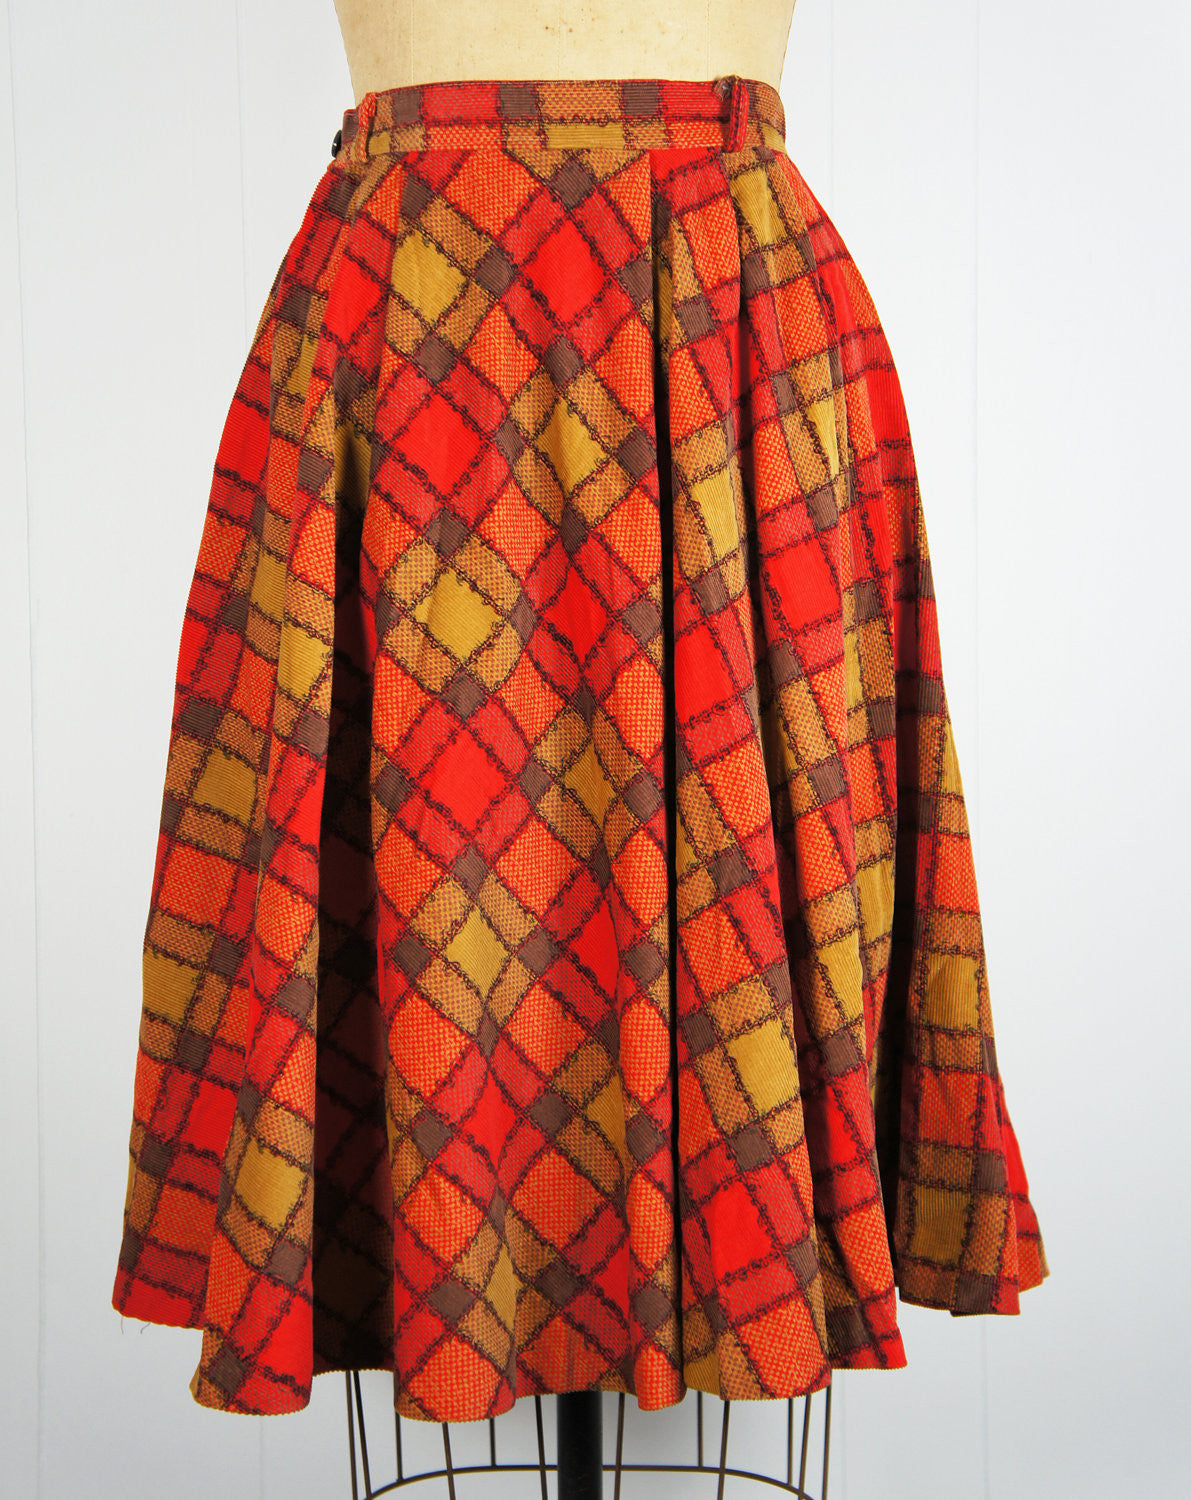 1950's Brown, Red & Tan Corduroy Full Skirt - Size XS